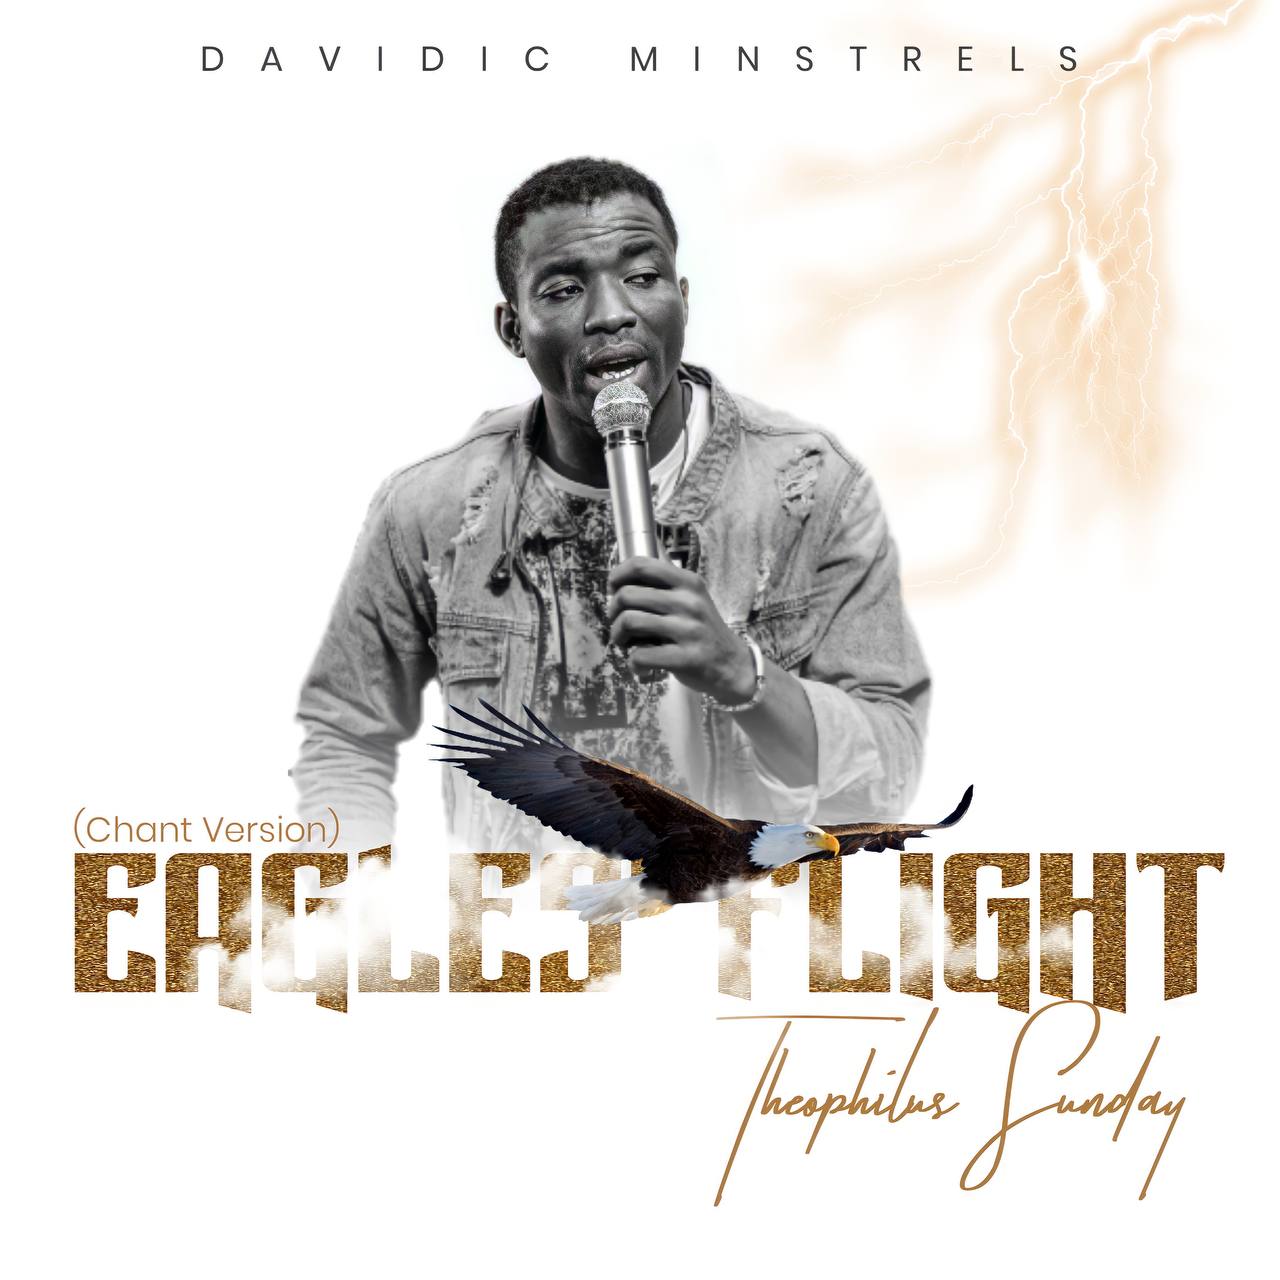 EAGLES FLIGHT Theophilus Sunday Mp3 Download Free (Audio+Lyrics) 17